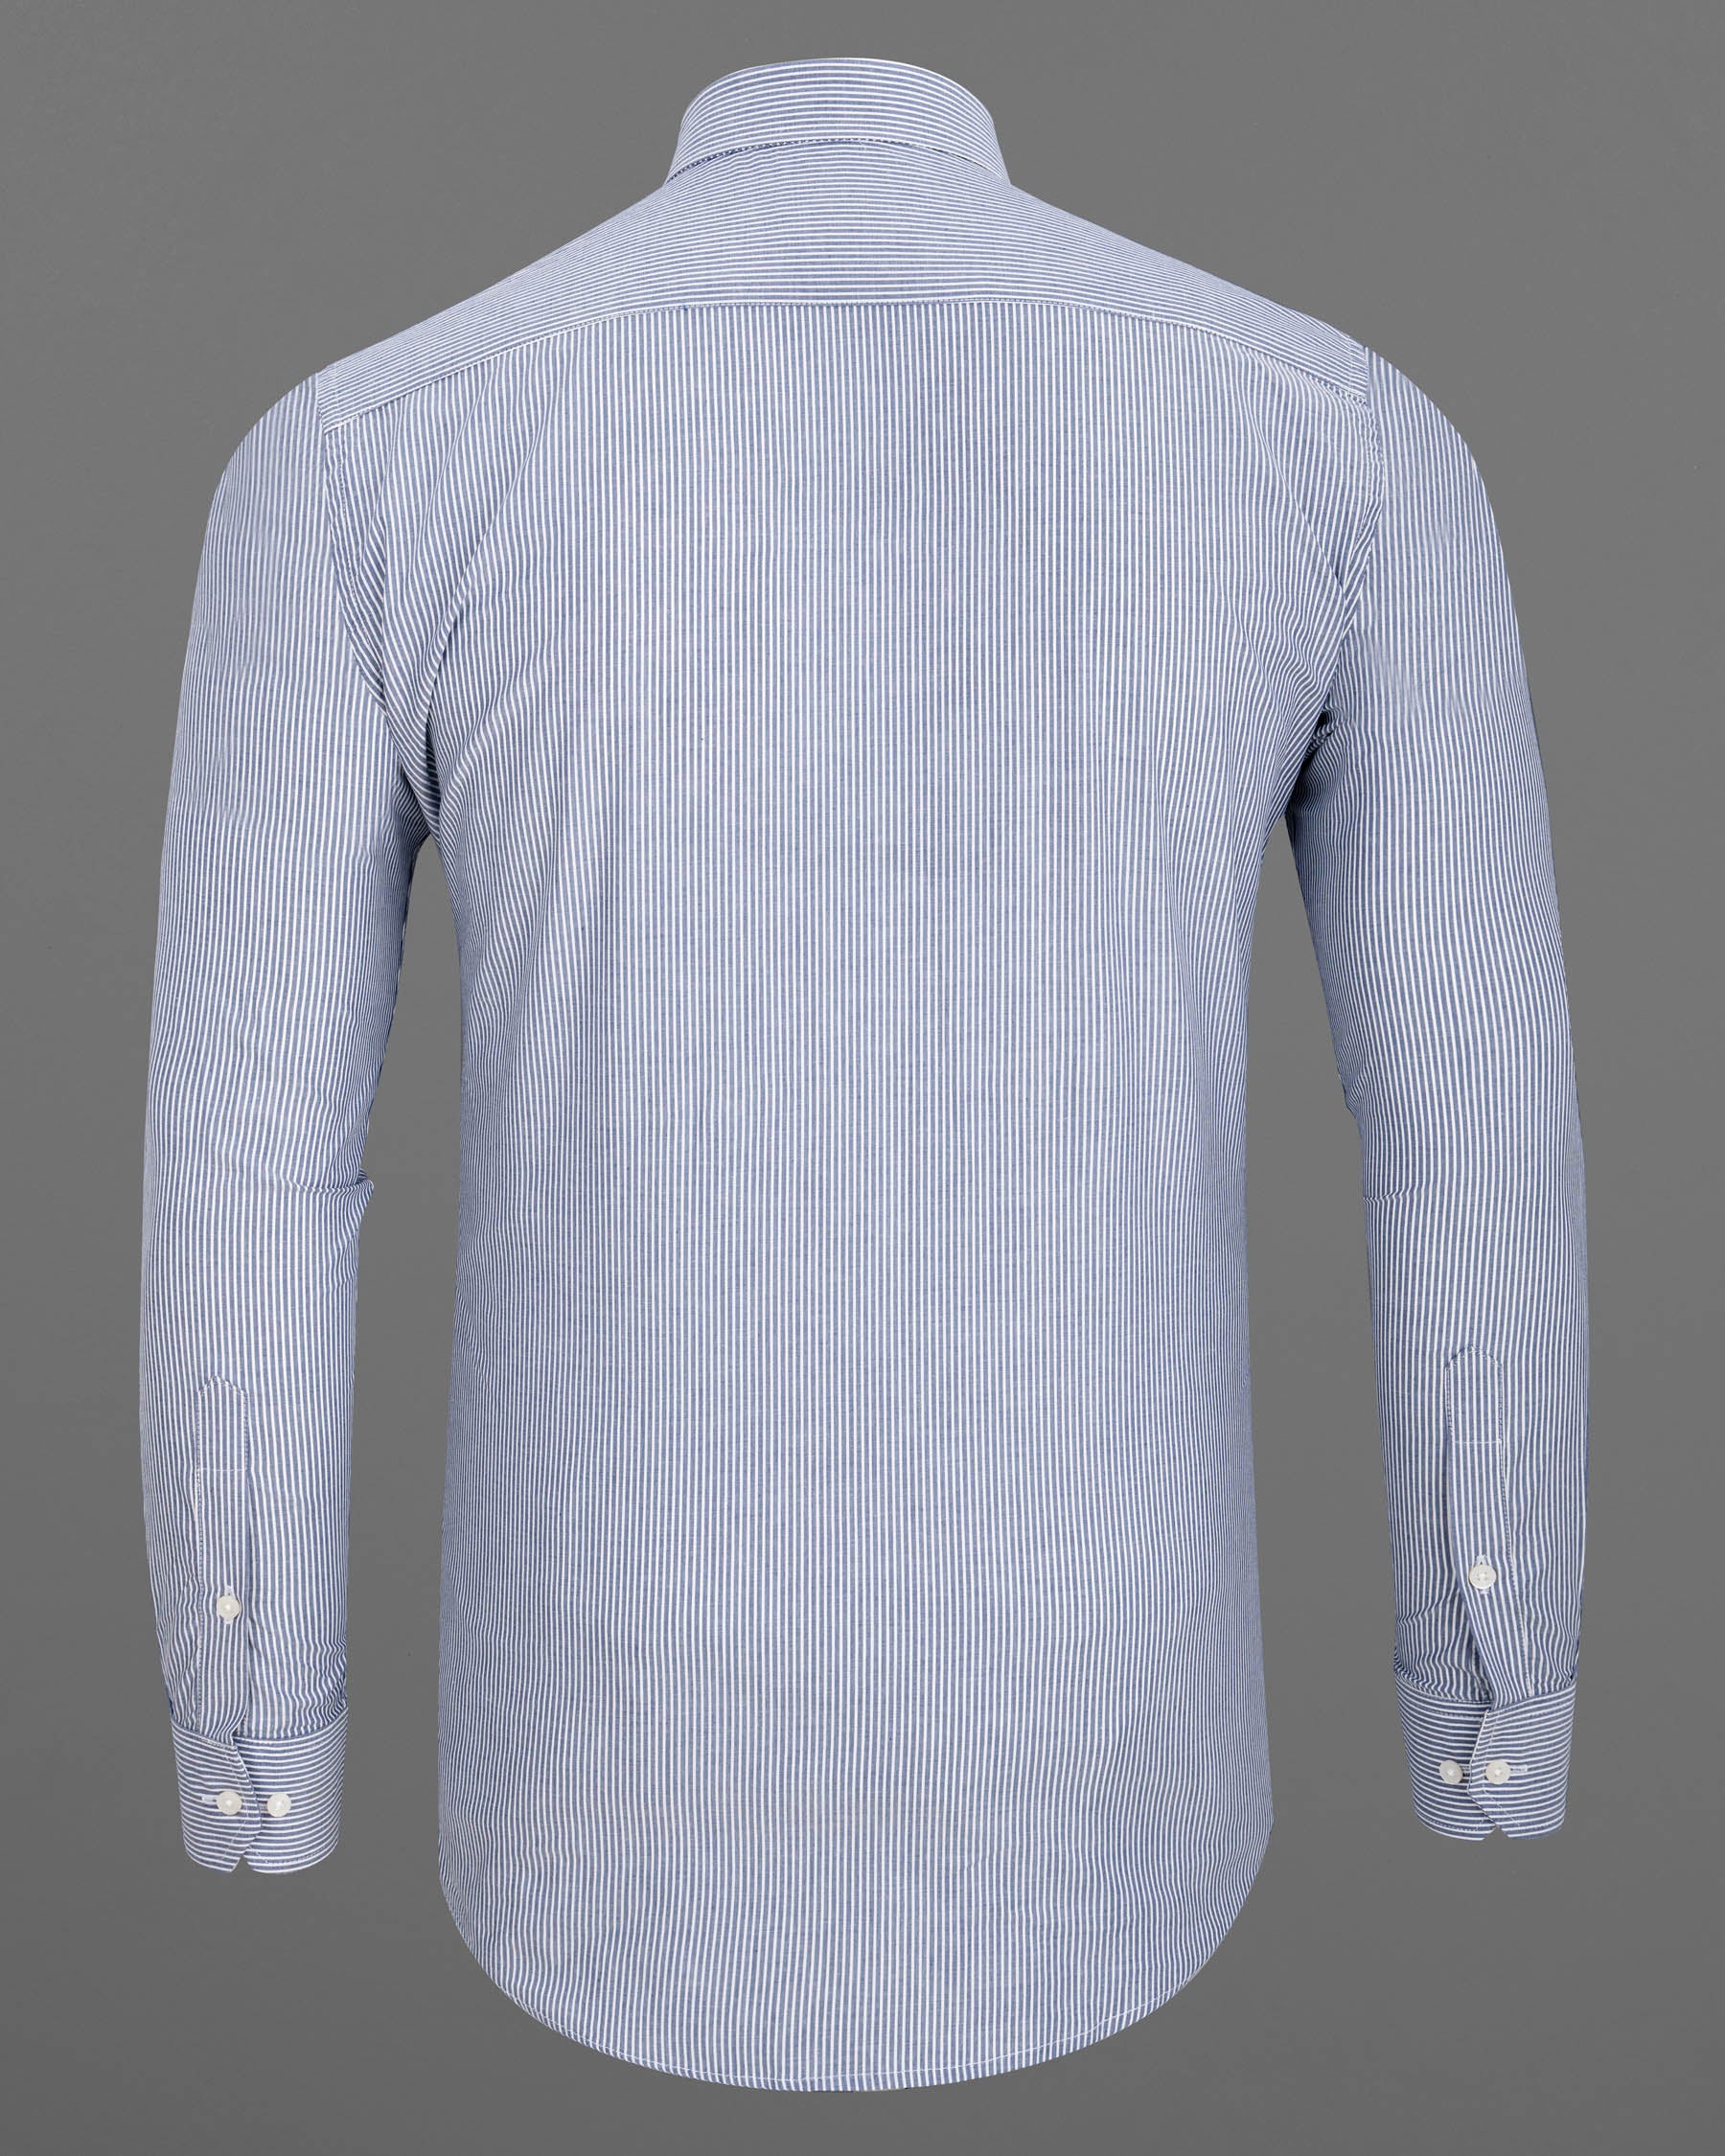 Cascade Blue Striped Premium Cotton Shirt 6773-38,6773-38,6773-39,6773-39,6773-40,6773-40,6773-42,6773-42,6773-44,6773-44,6773-46,6773-46,6773-48,6773-48,6773-50,6773-50,6773-52,6773-52